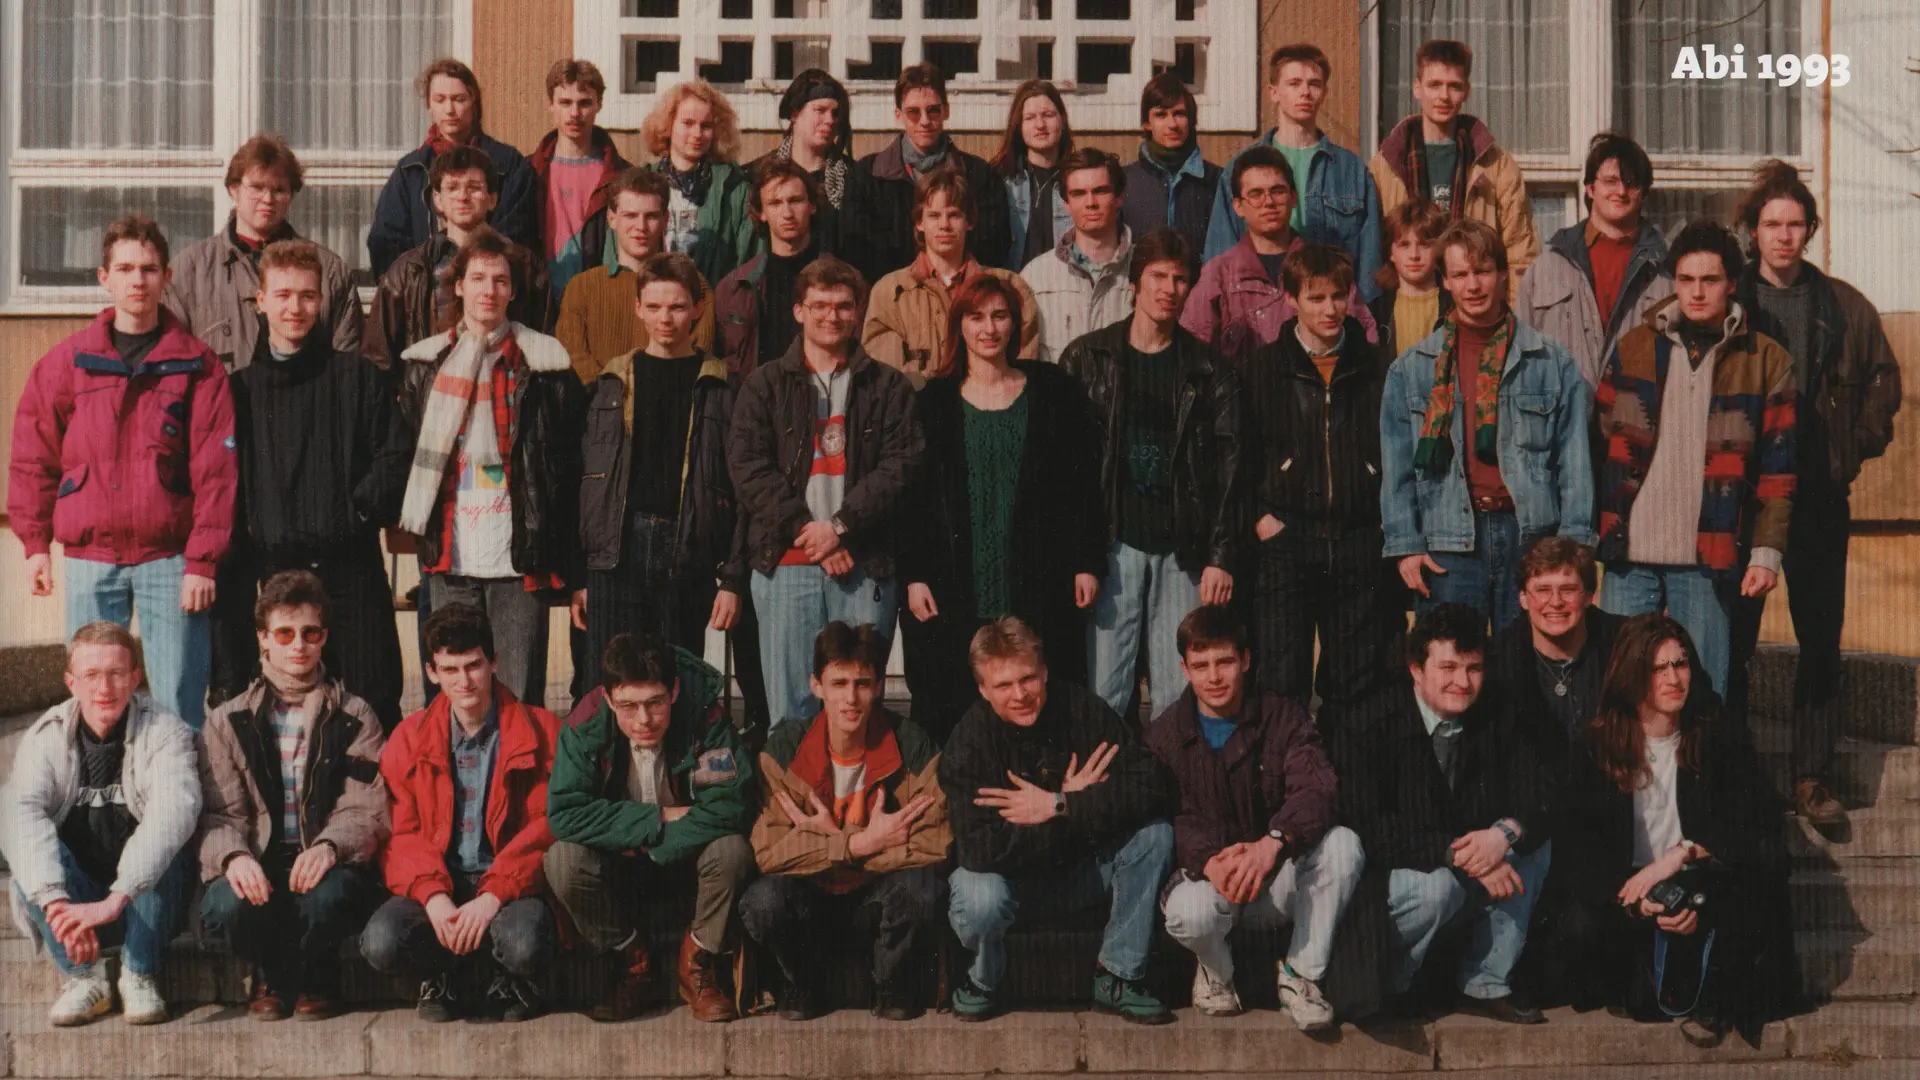 Abiturienten 1993